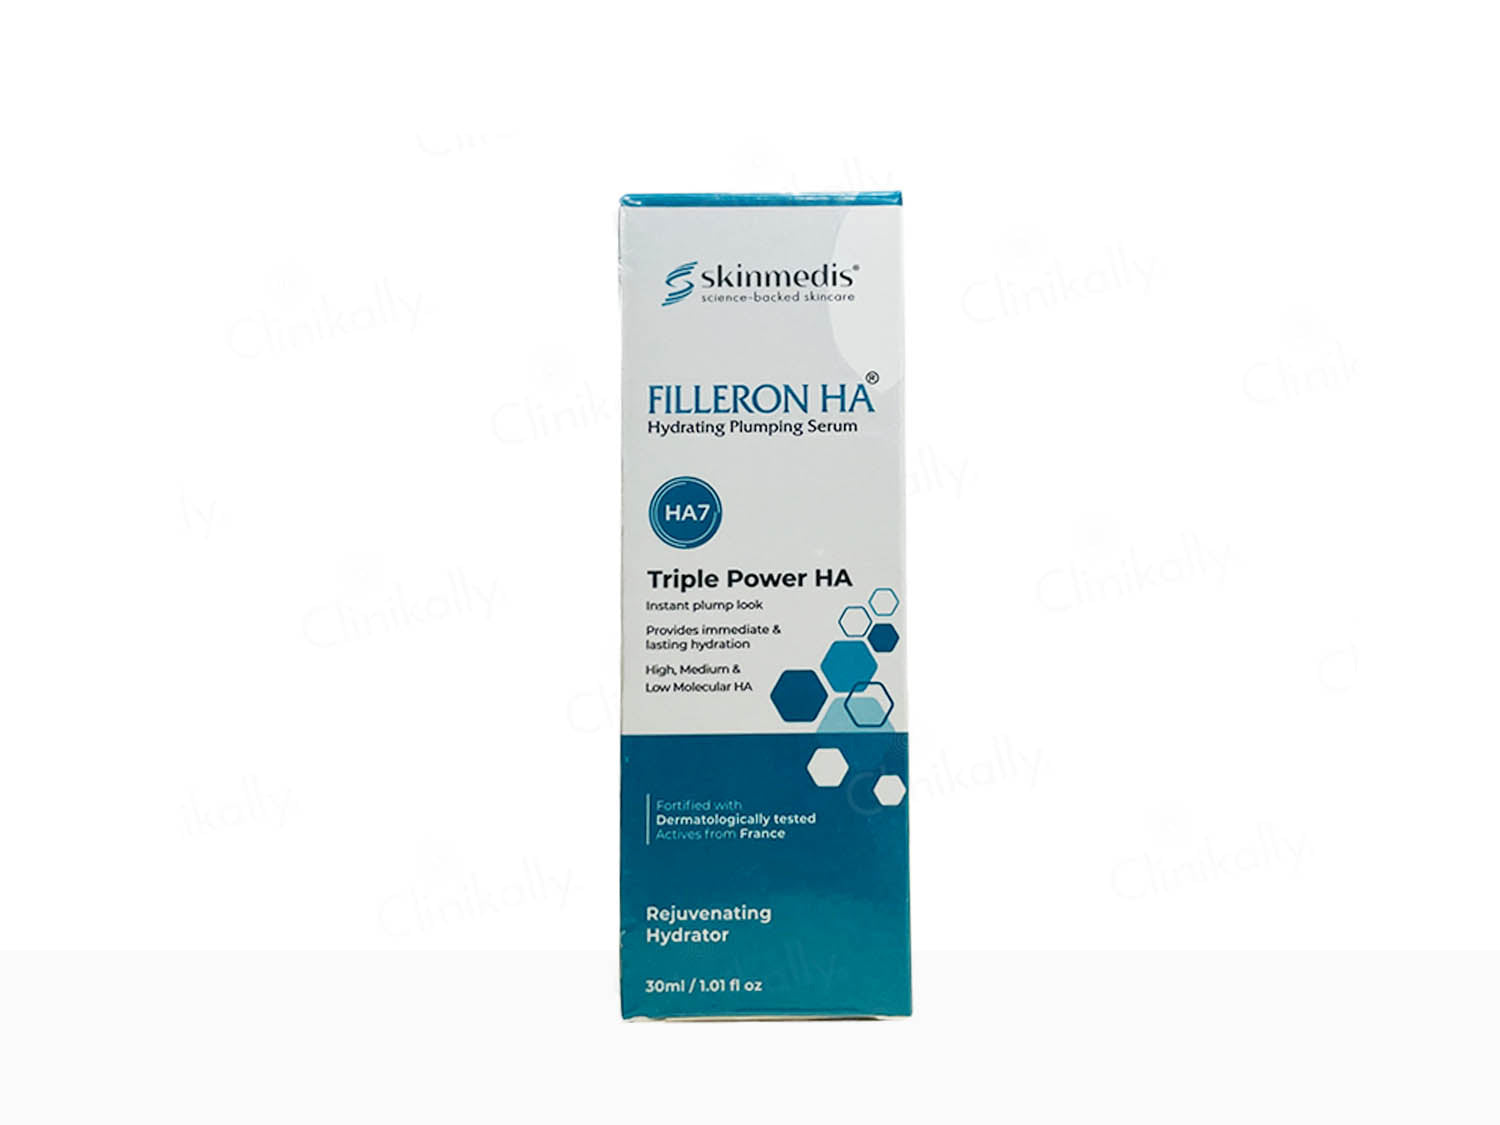 Skinmedis Filleron HA Hydrating Plumping Serum-Clinikally